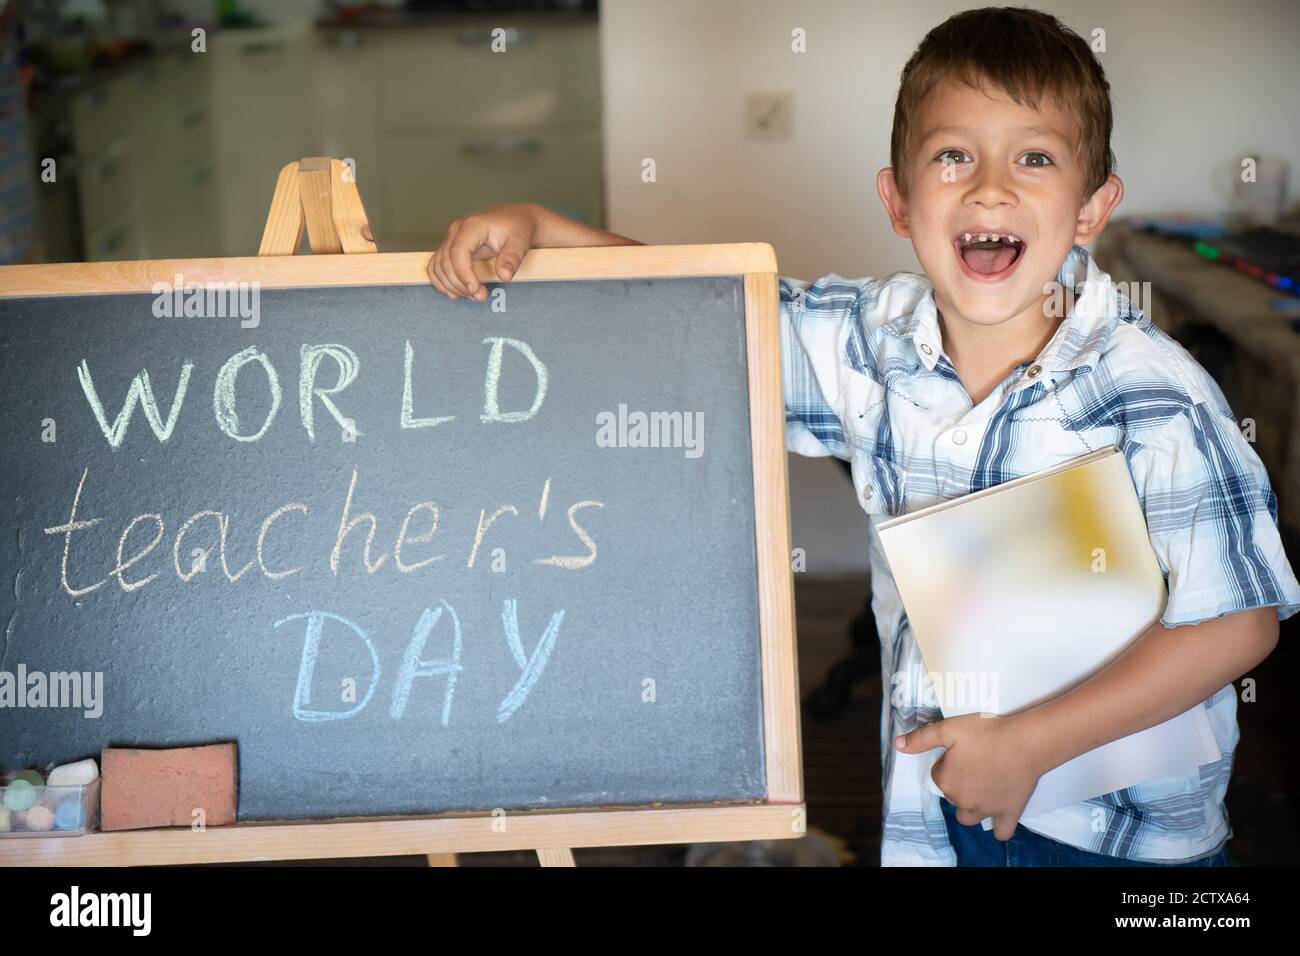 World Teacher's Day greeting, pupil boy near the chalkboard, chalk inscription text Stock Photo